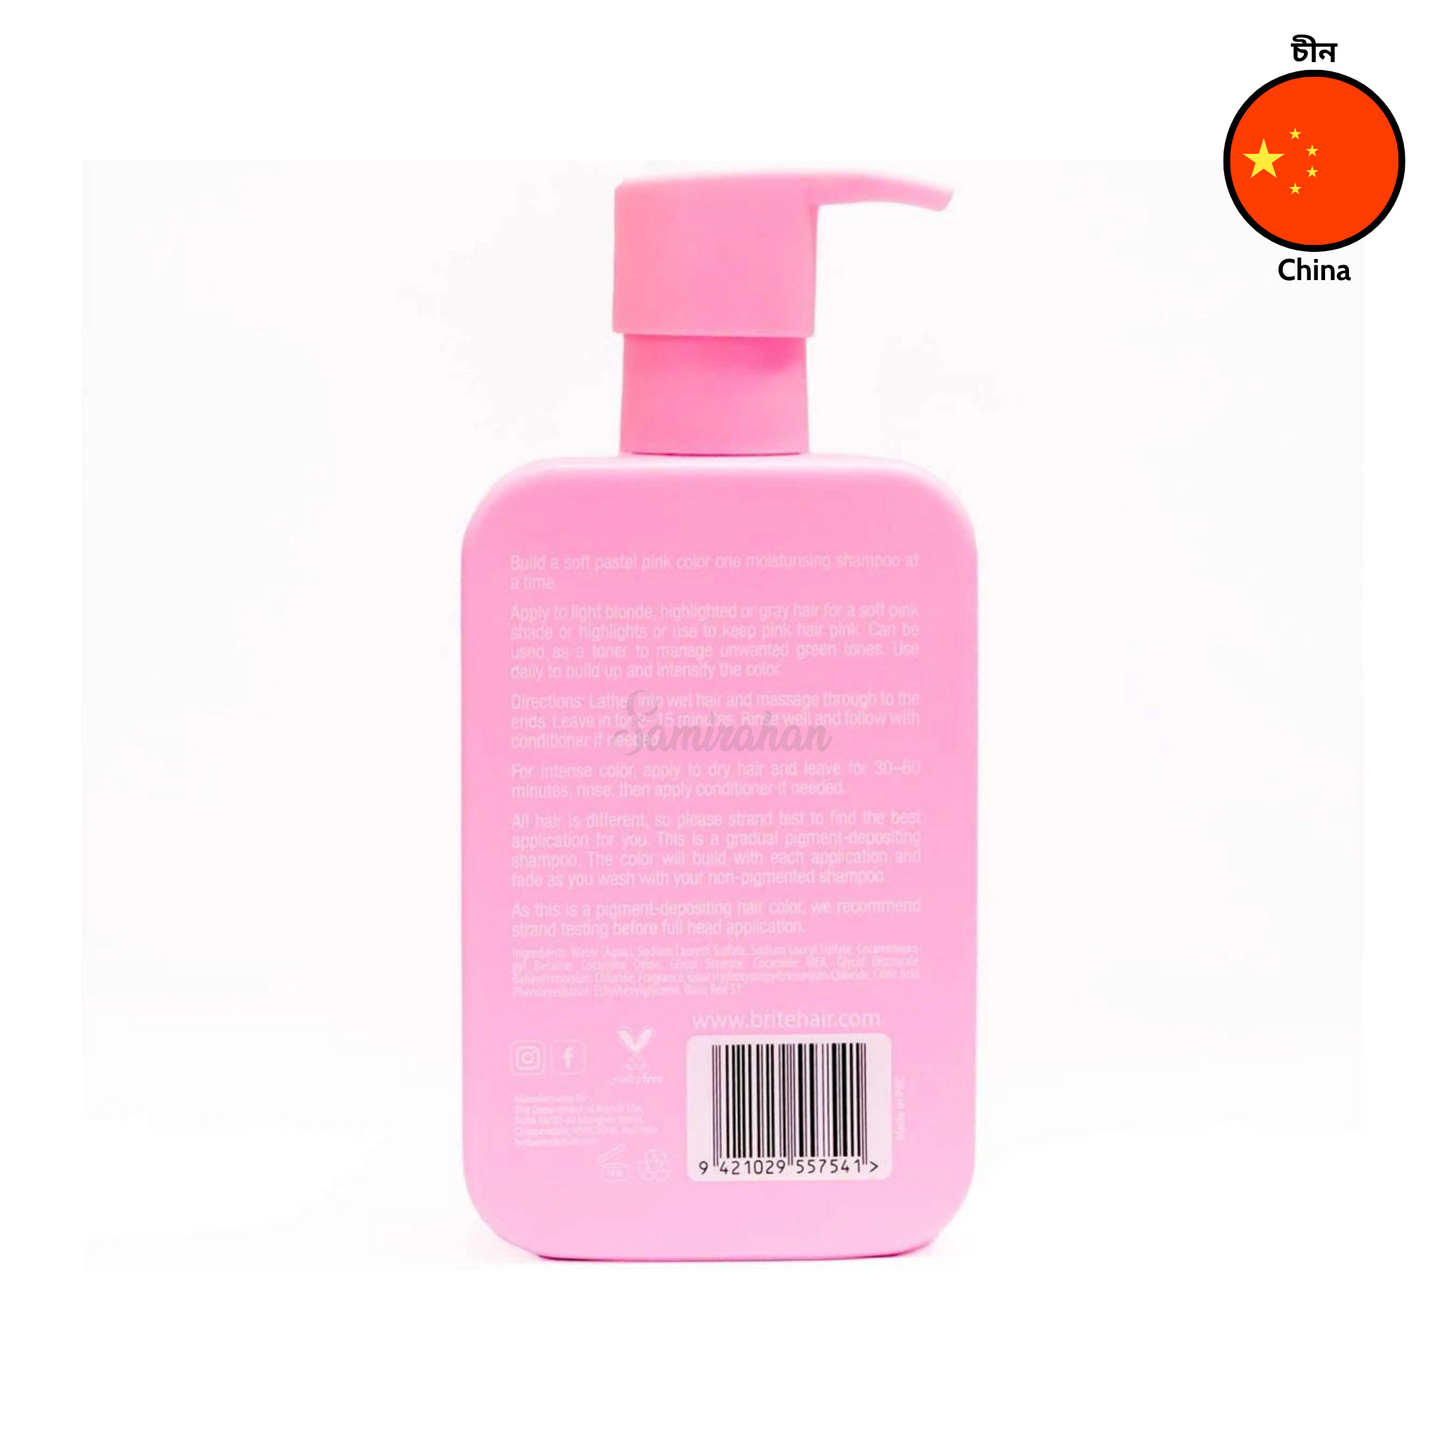 Brite Shampoo Color Pastel Pink 300mL